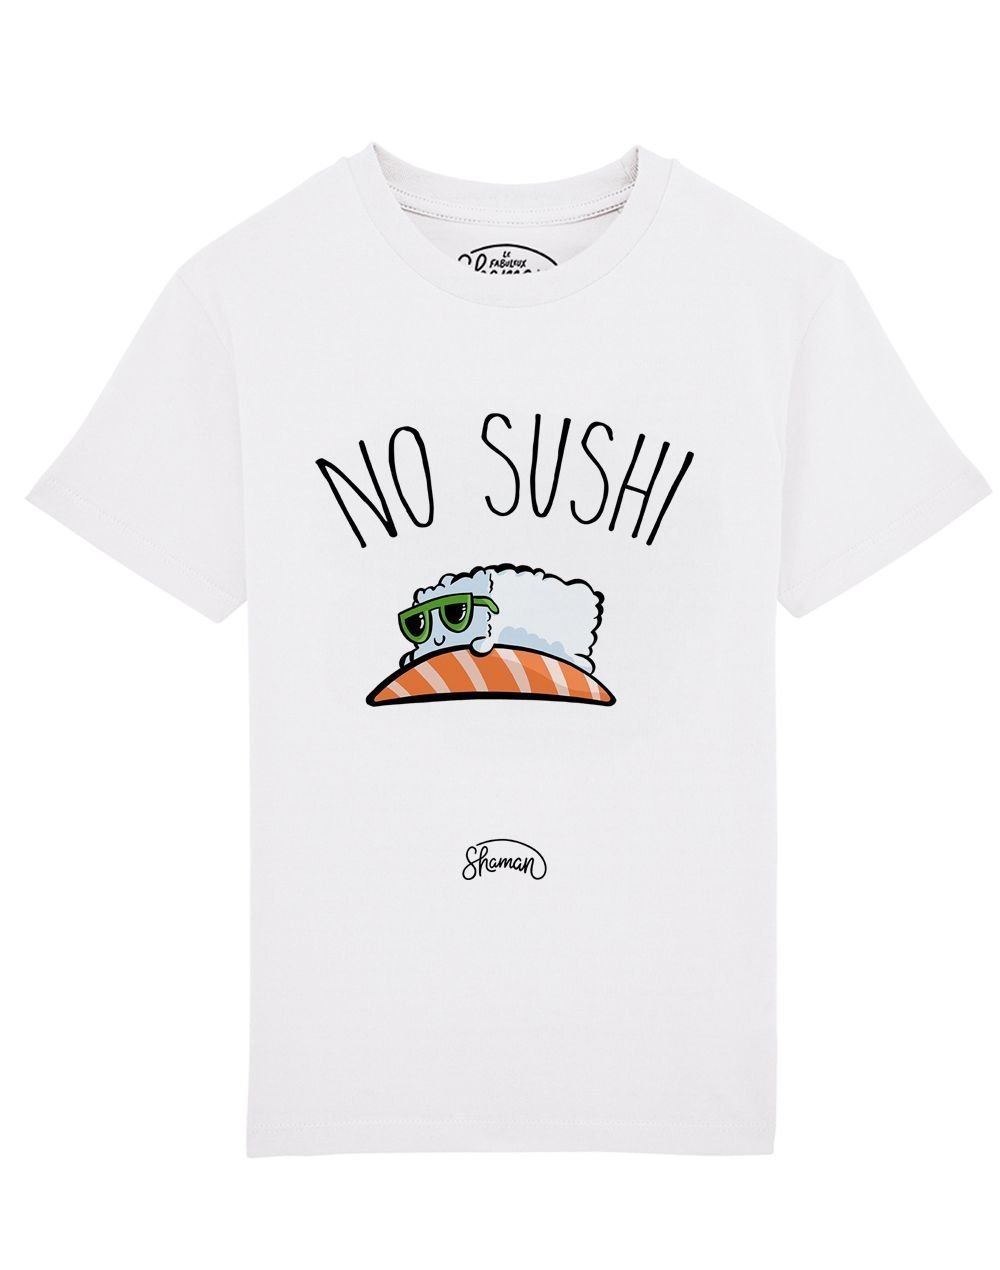 Tee shirt No sushi